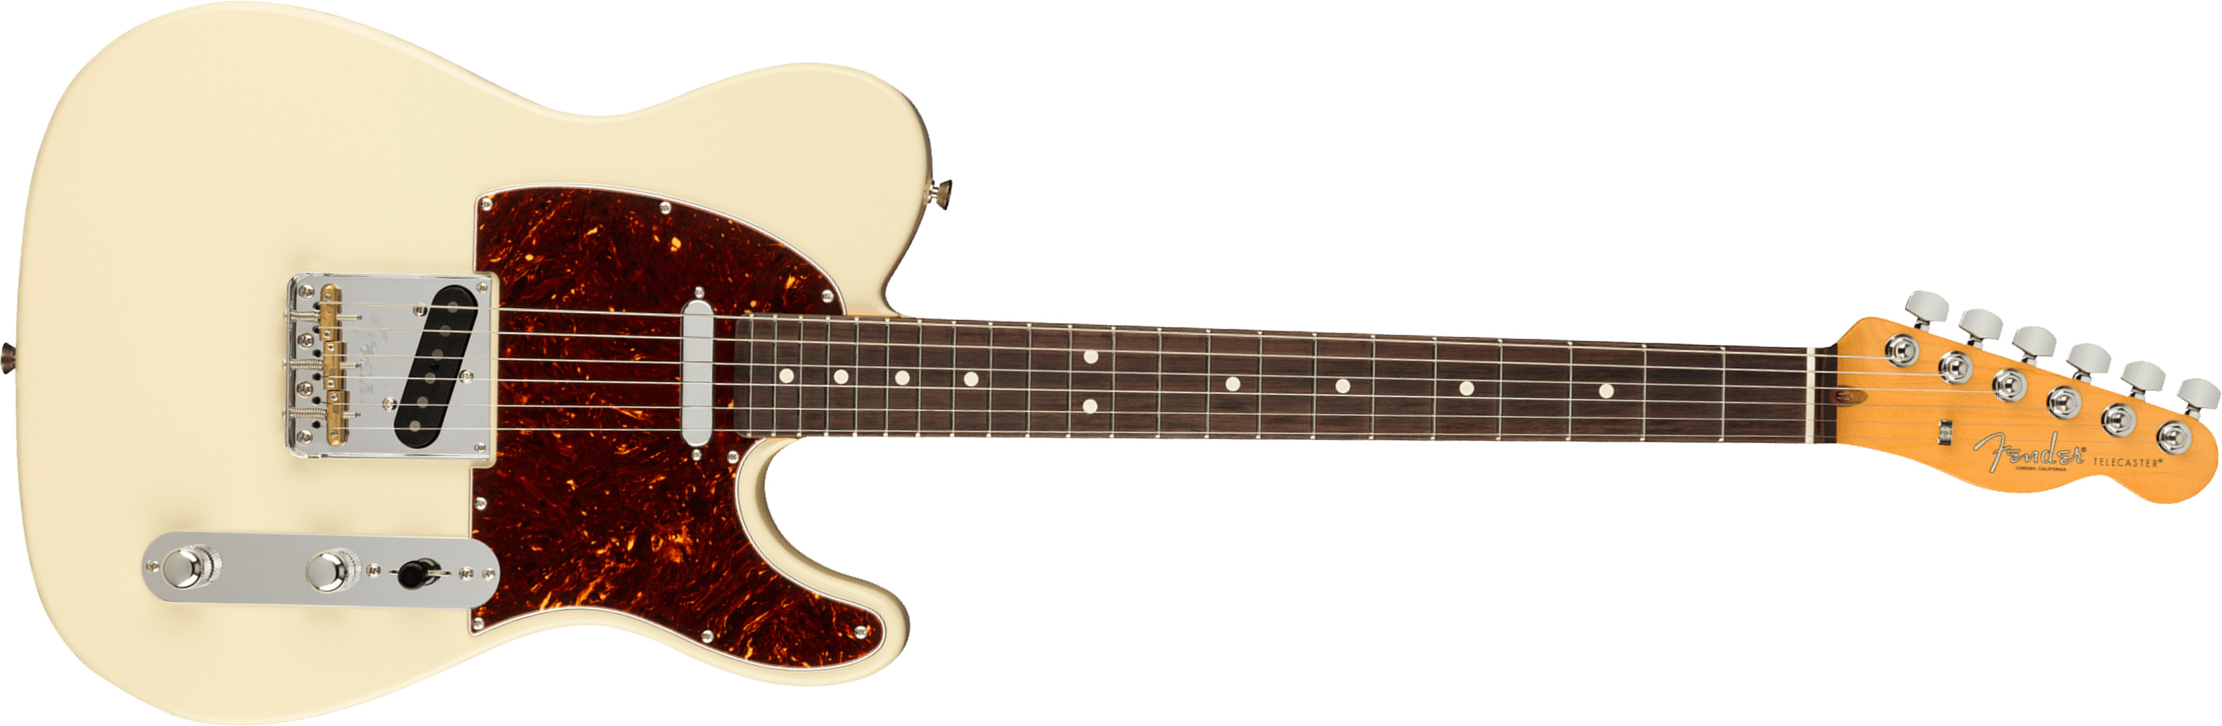 Fender Tele American Professional Ii Usa Rw - Olympic White - Televorm elektrische gitaar - Main picture